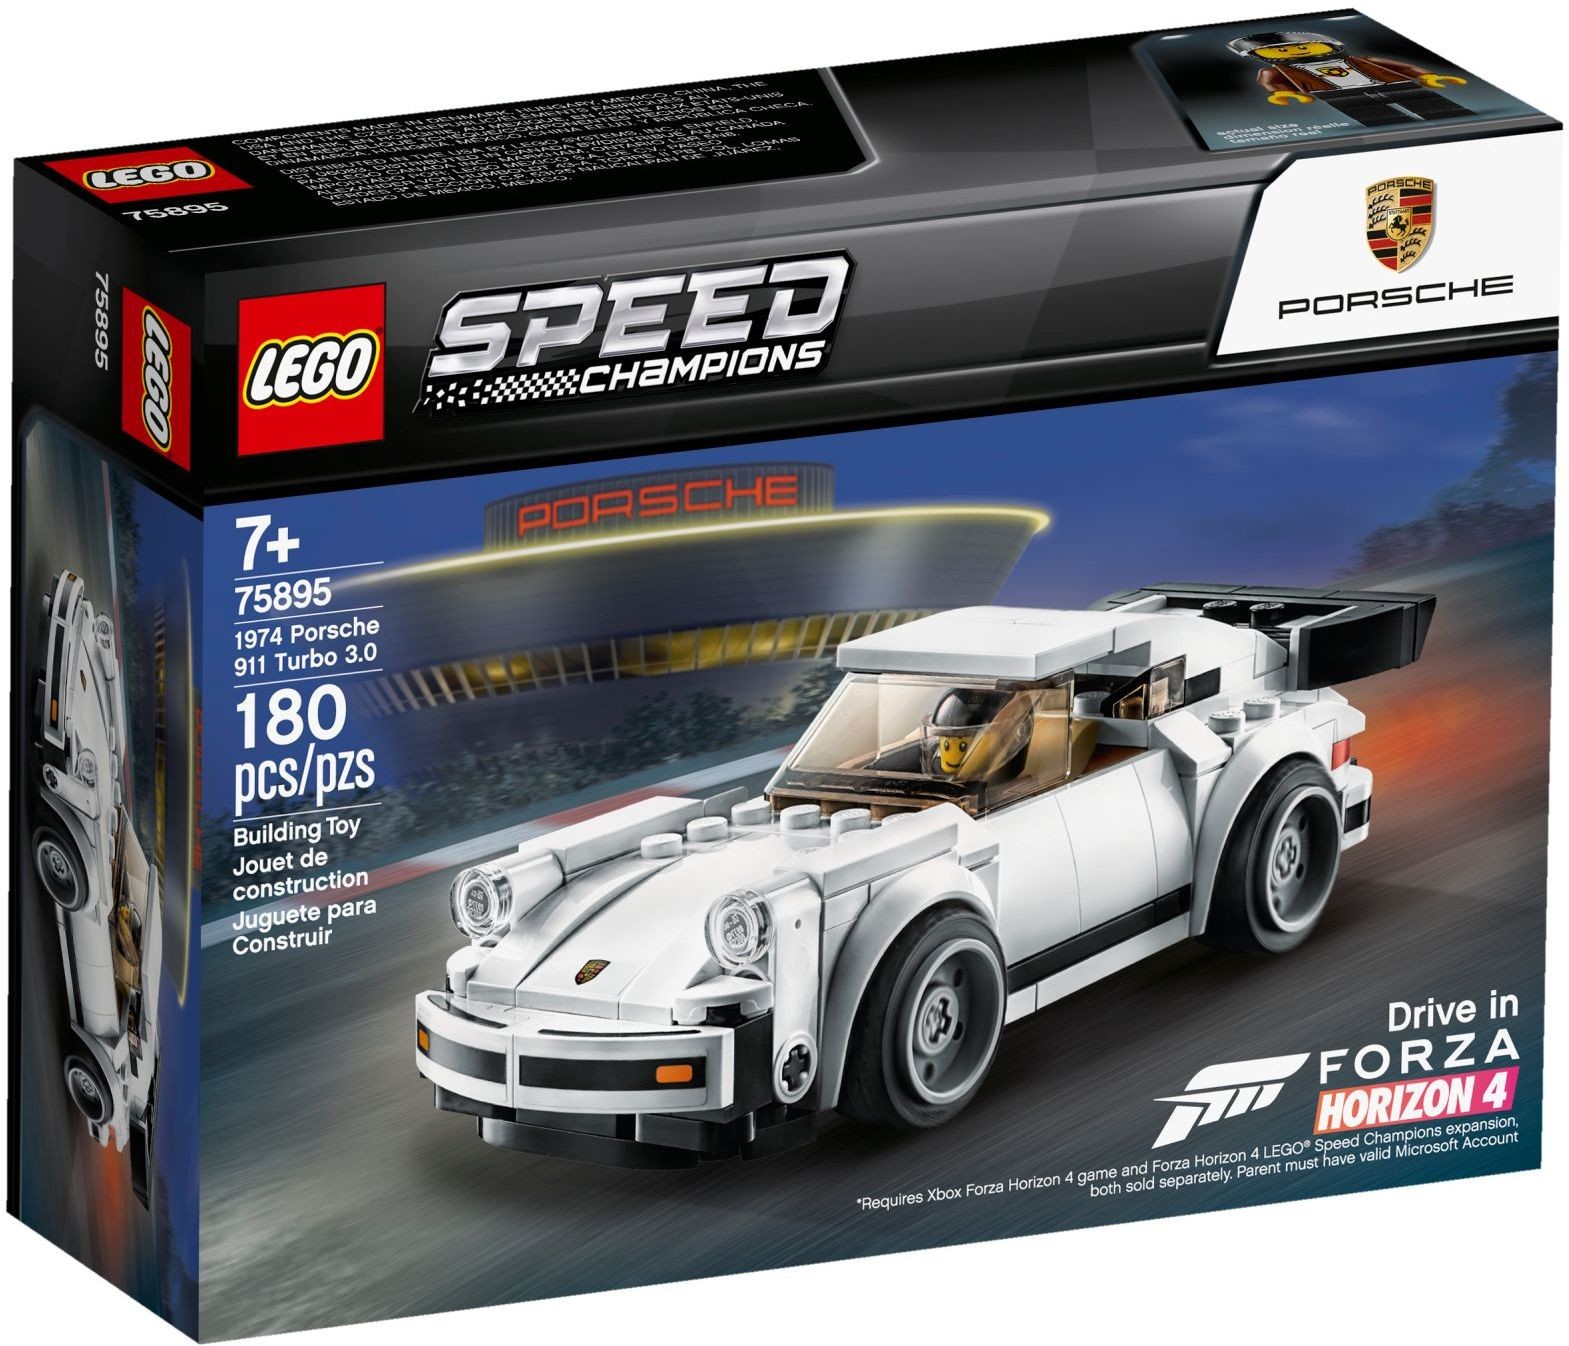 WANGE 2872 Super Racing Cars: Porsche 911 RSR and Porsche 911 Turbo 3.0 7